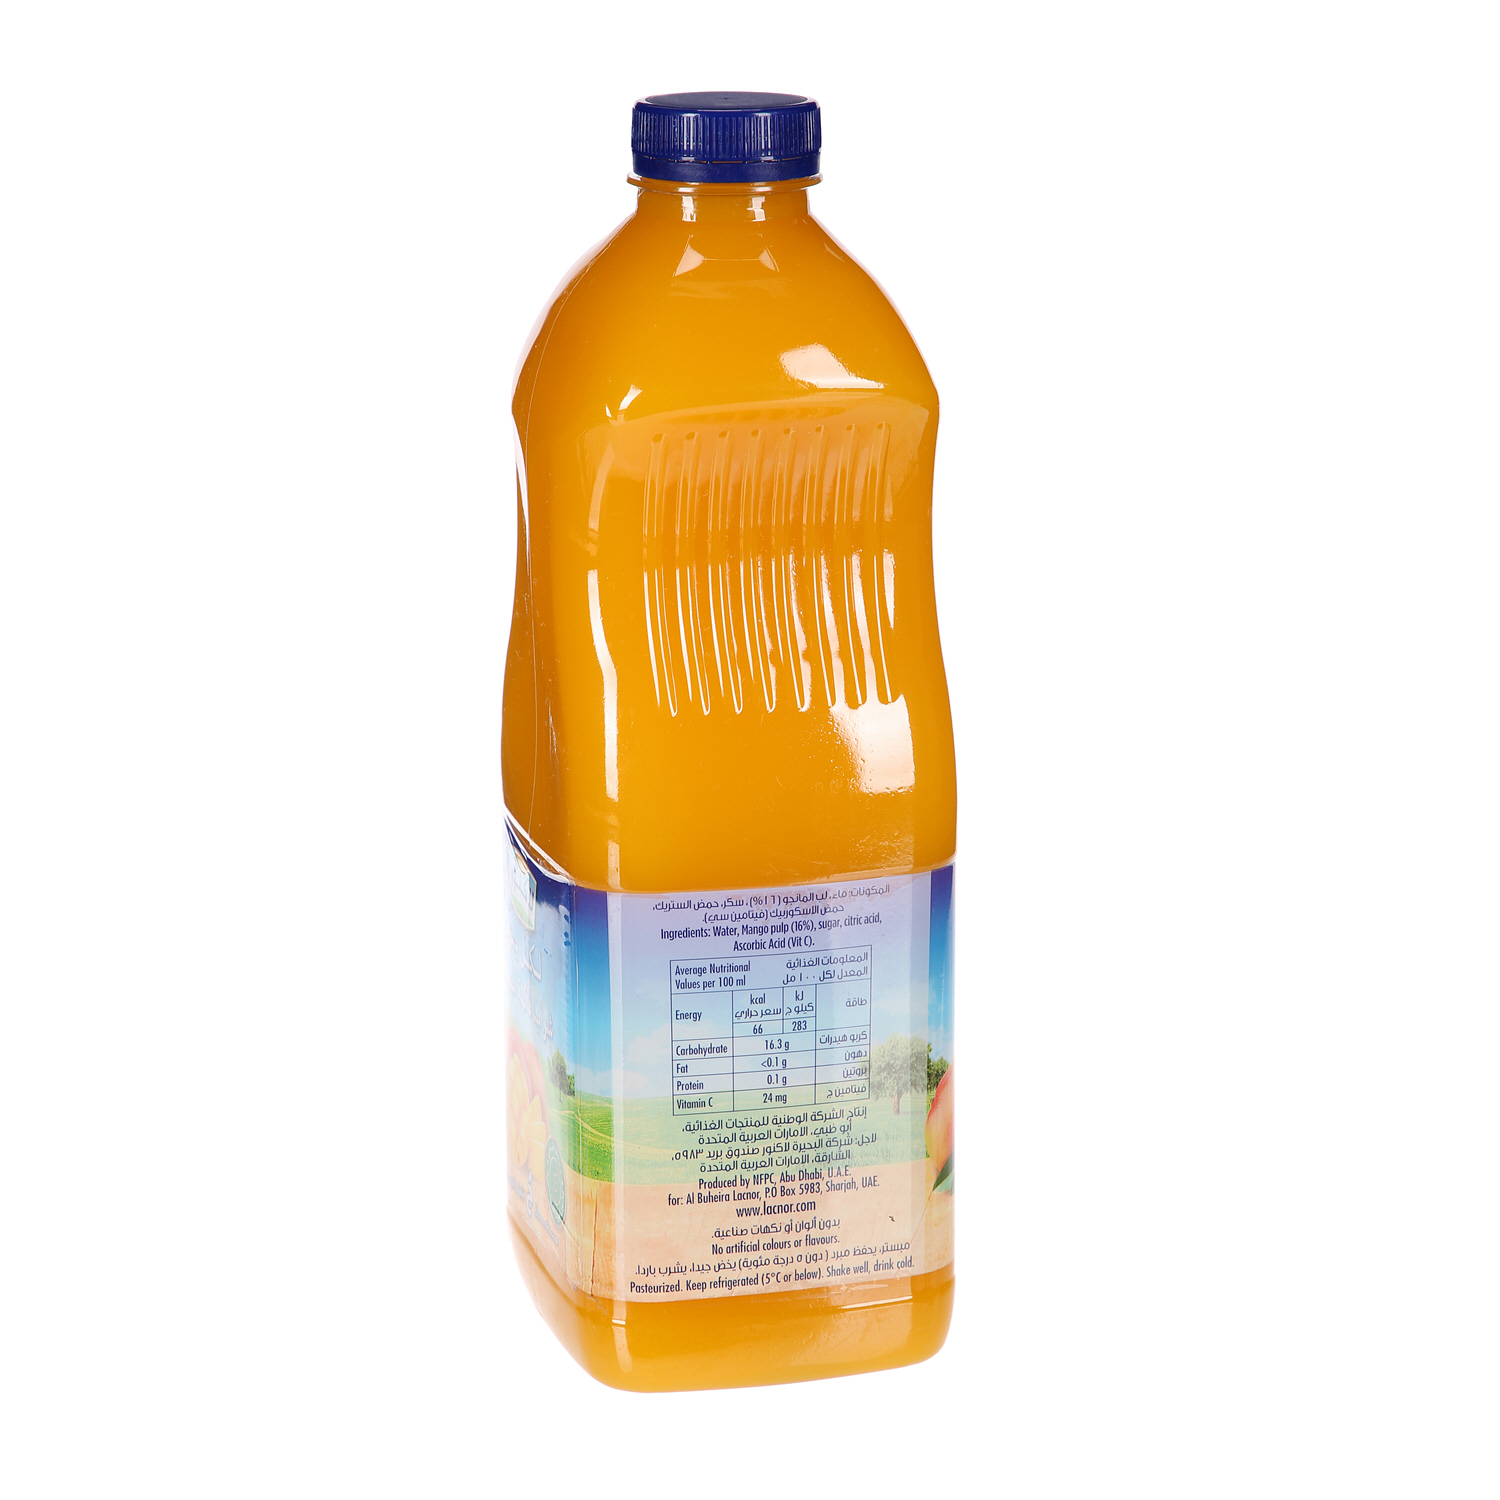 Lacnor Mango Fresh Juice 1.75Ltr